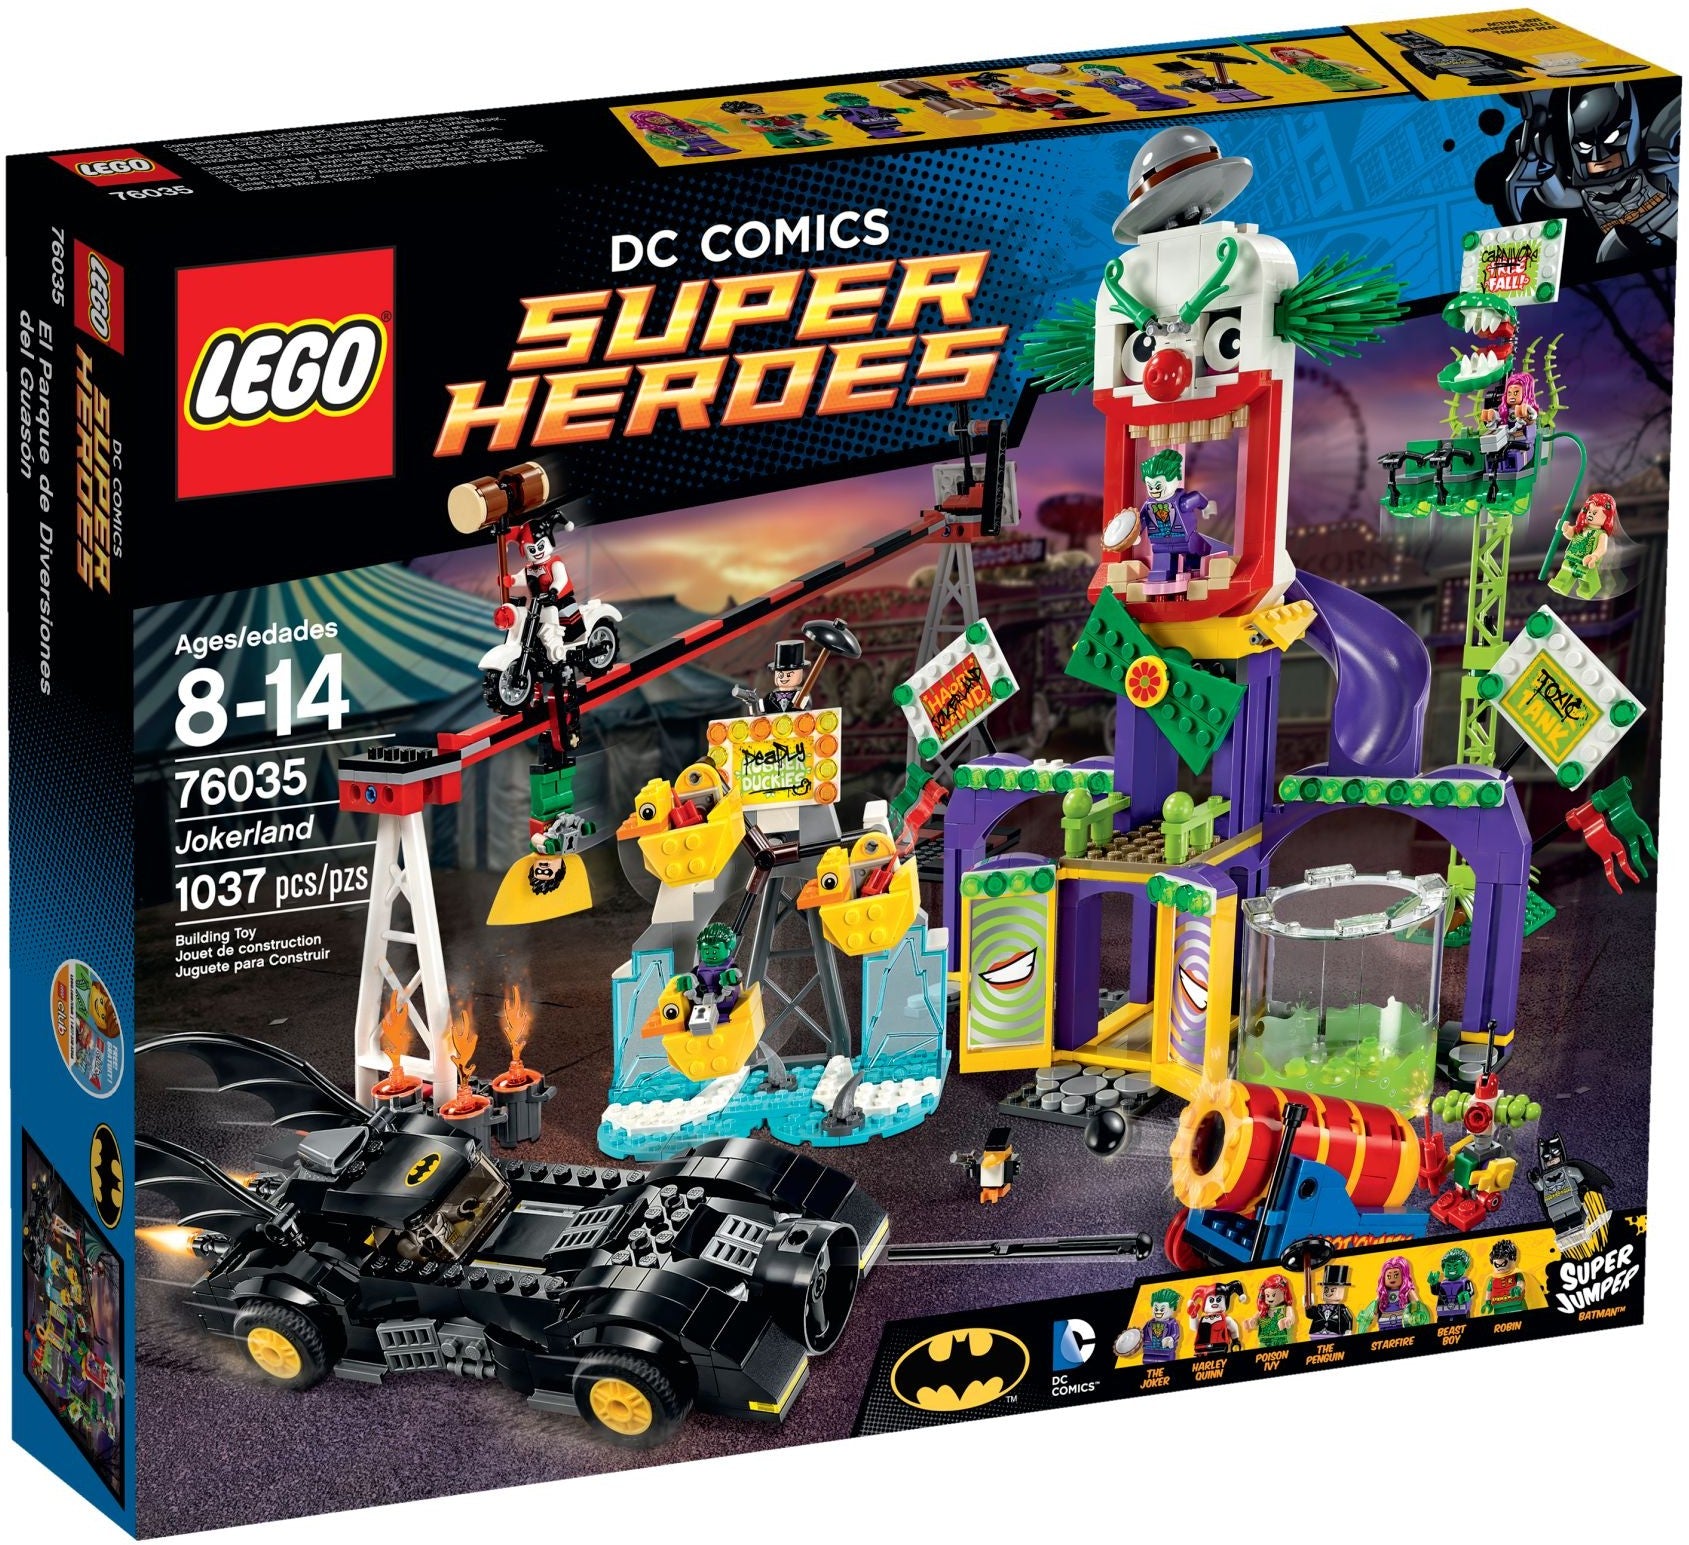 Lego Super Heroes 76035 - Jokerland